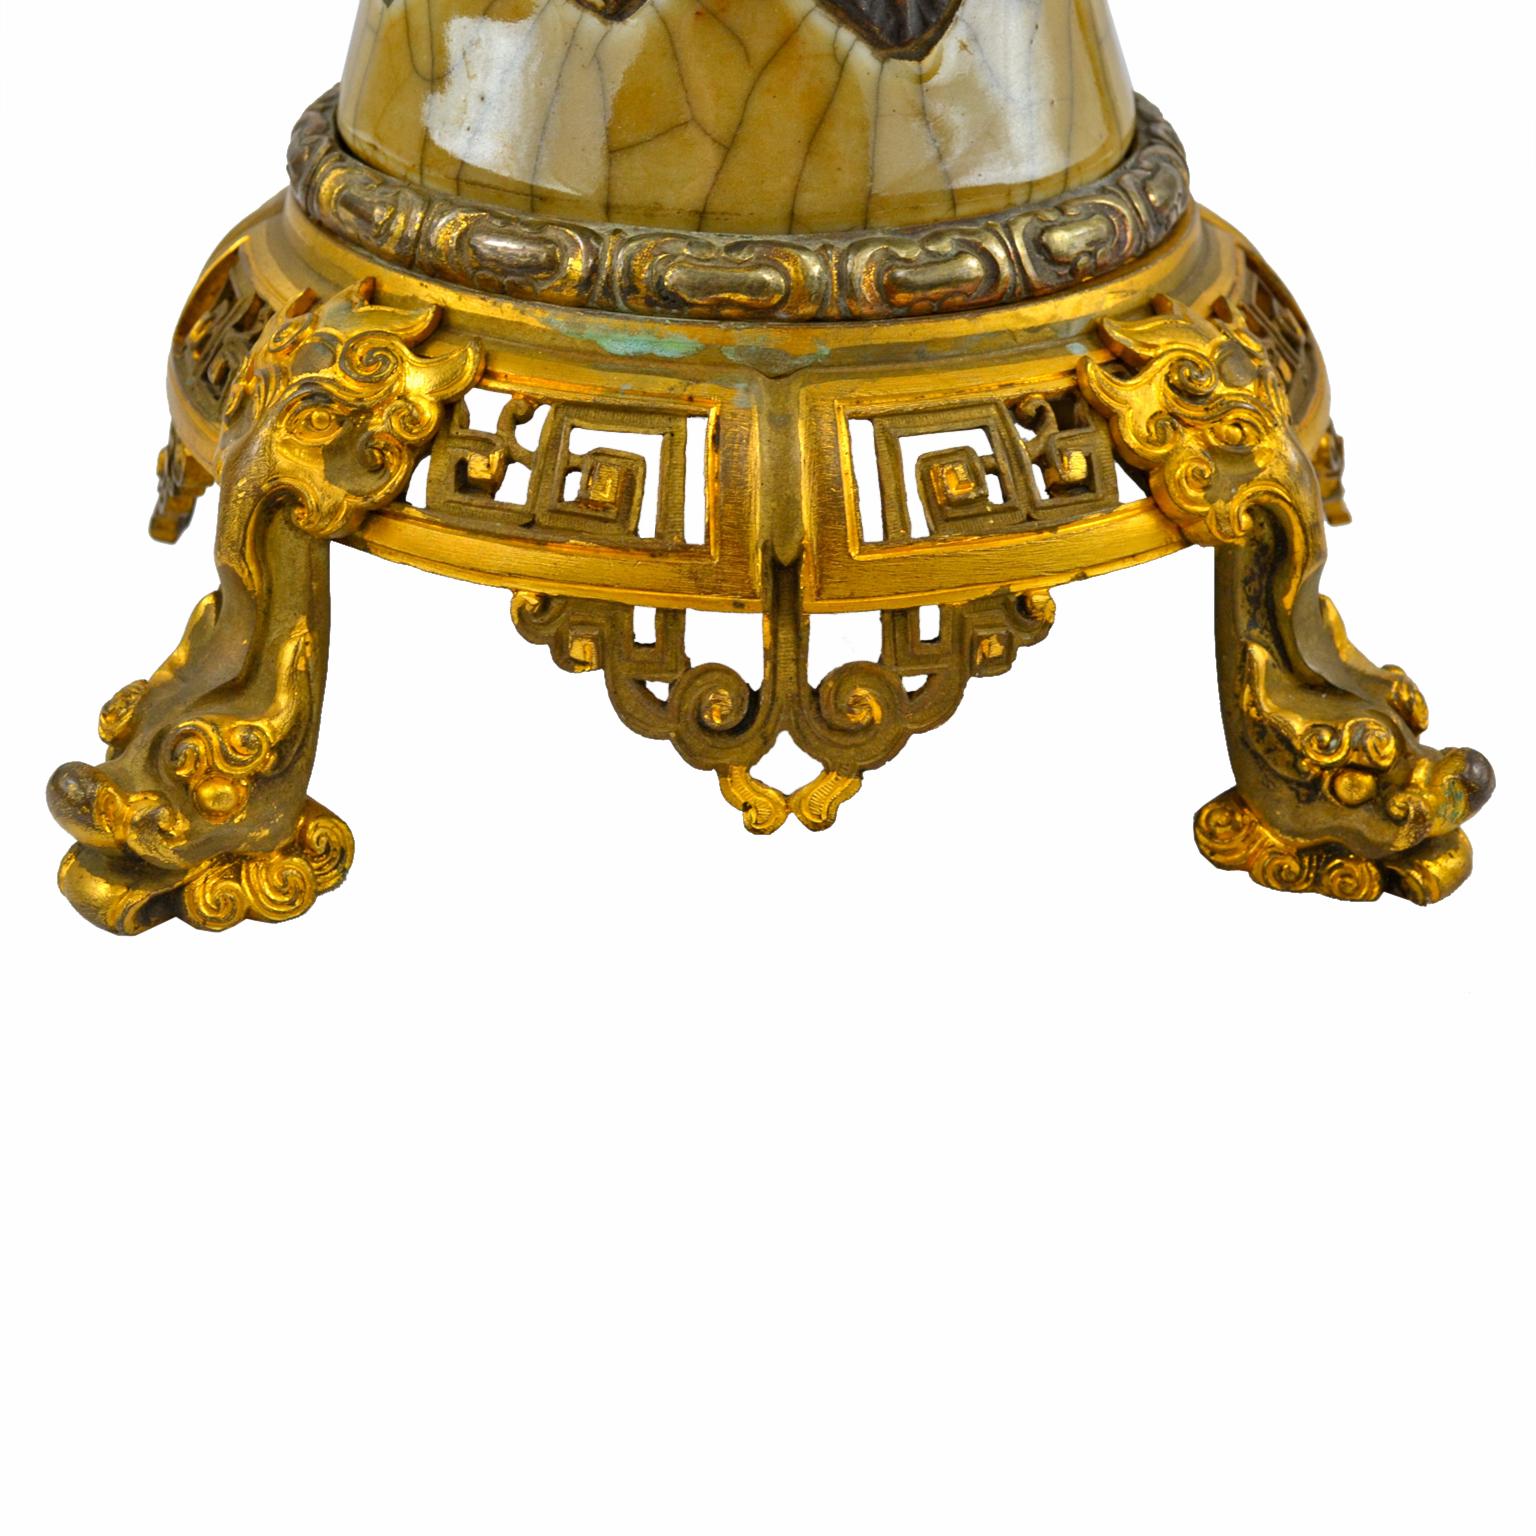 19th Century Chinese Nanking Period Crackle Glaze Celadon porcelain Vase with Bronze Base